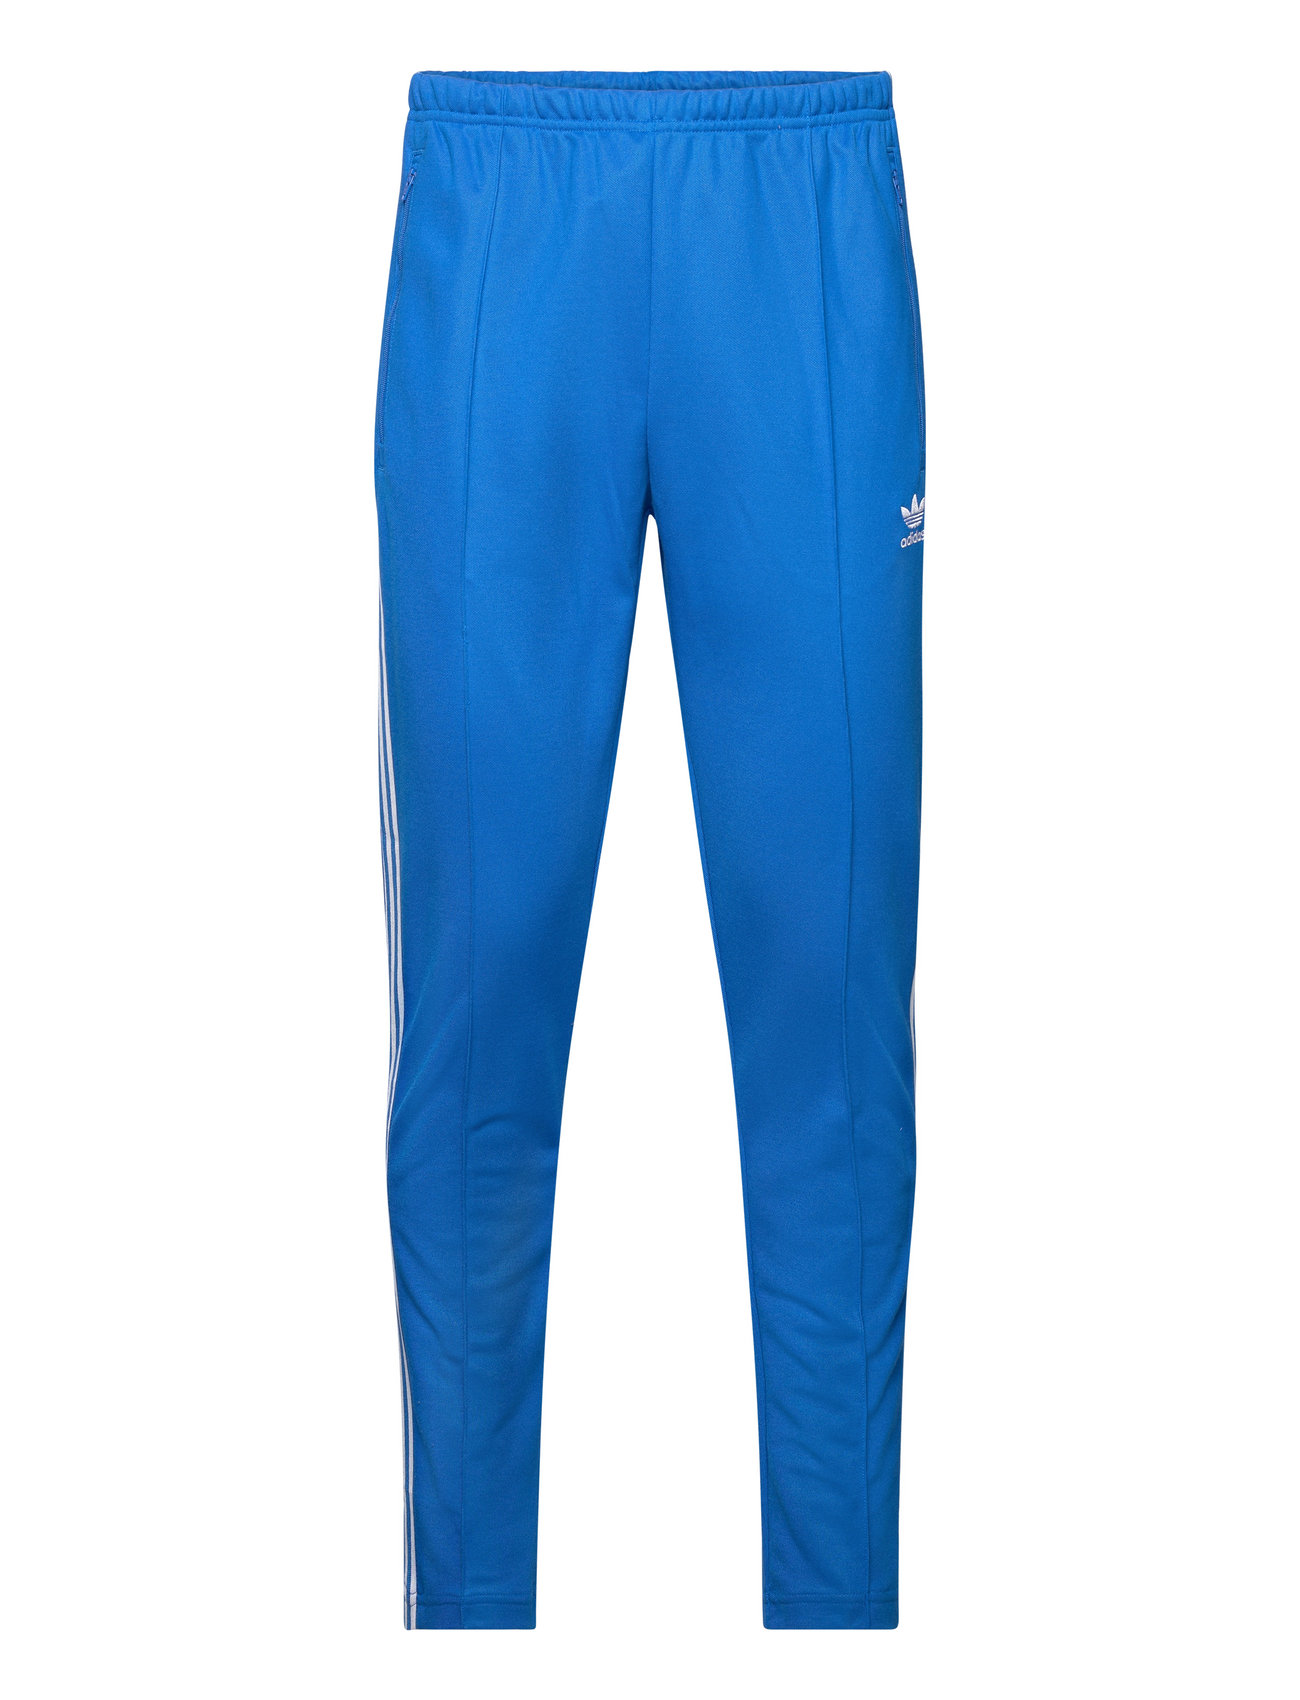 Beckenbauer Tp Bottoms Sweatpants Blue Adidas Originals